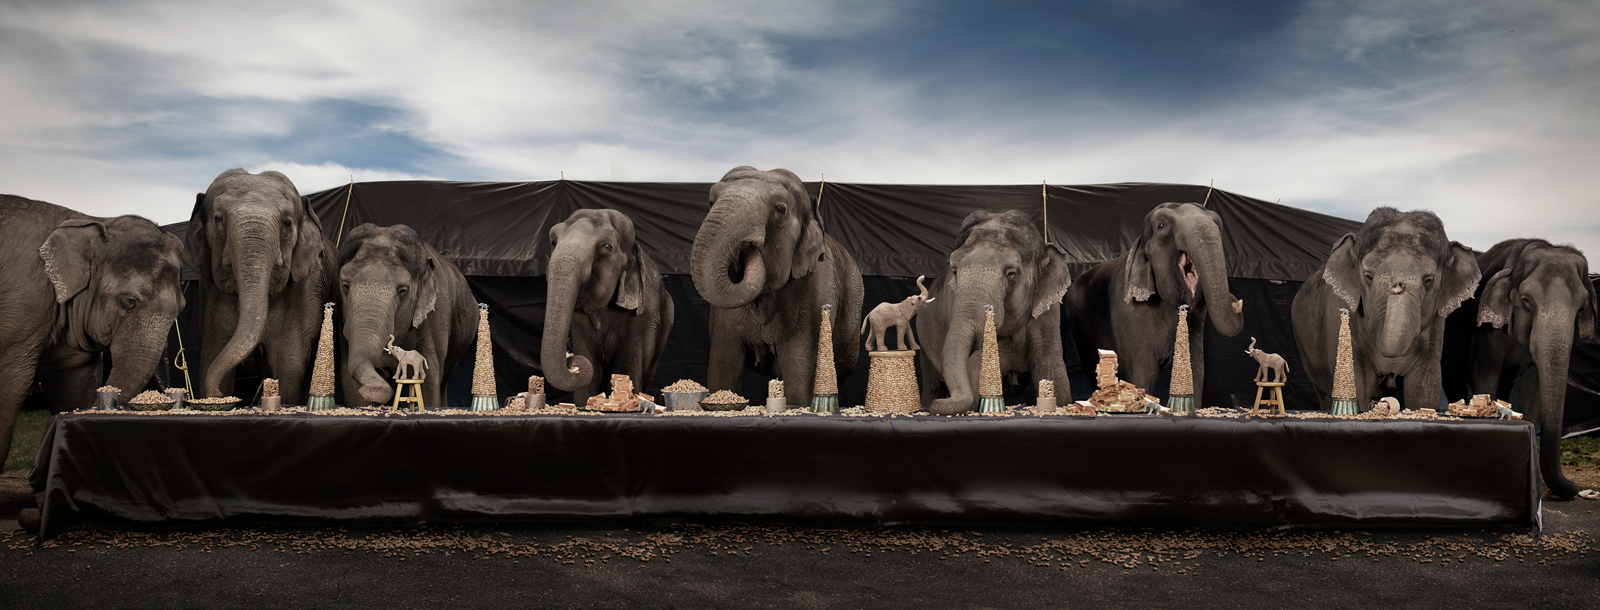  The Elephant Feast  United States, 2013  10”x26” | 20”x52” | 40”x104” 